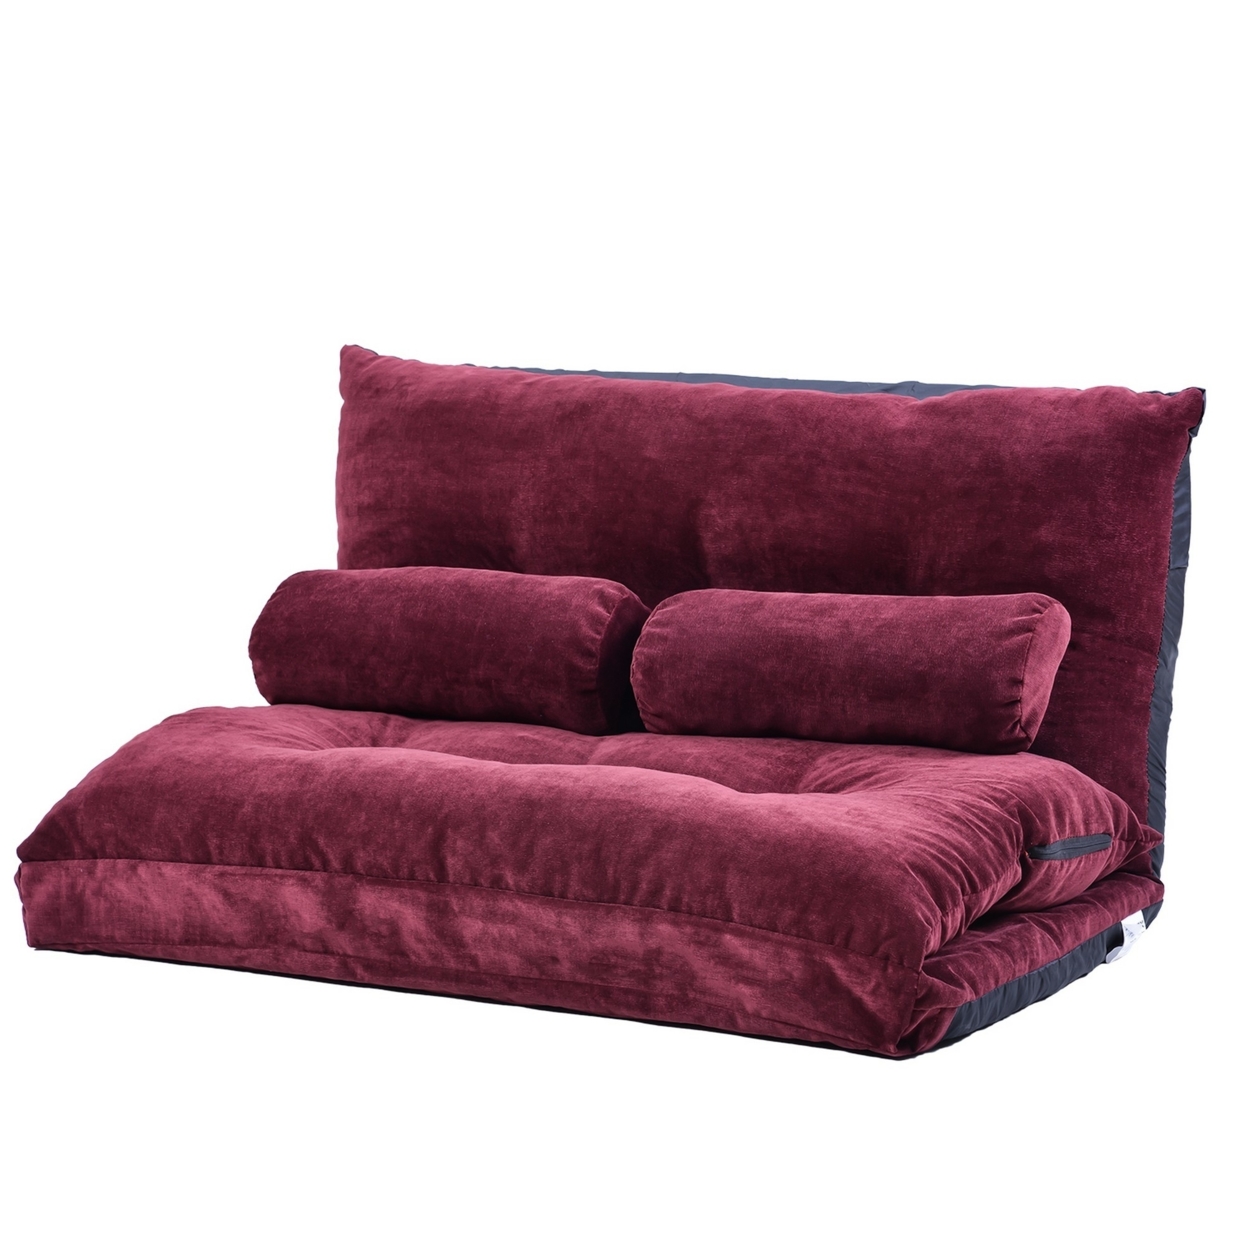 Ross 43 Inch Adjustable Futon Sofa, Folding, 2 Pillows, Reclining, Burgundy- Saltoro Sherpi